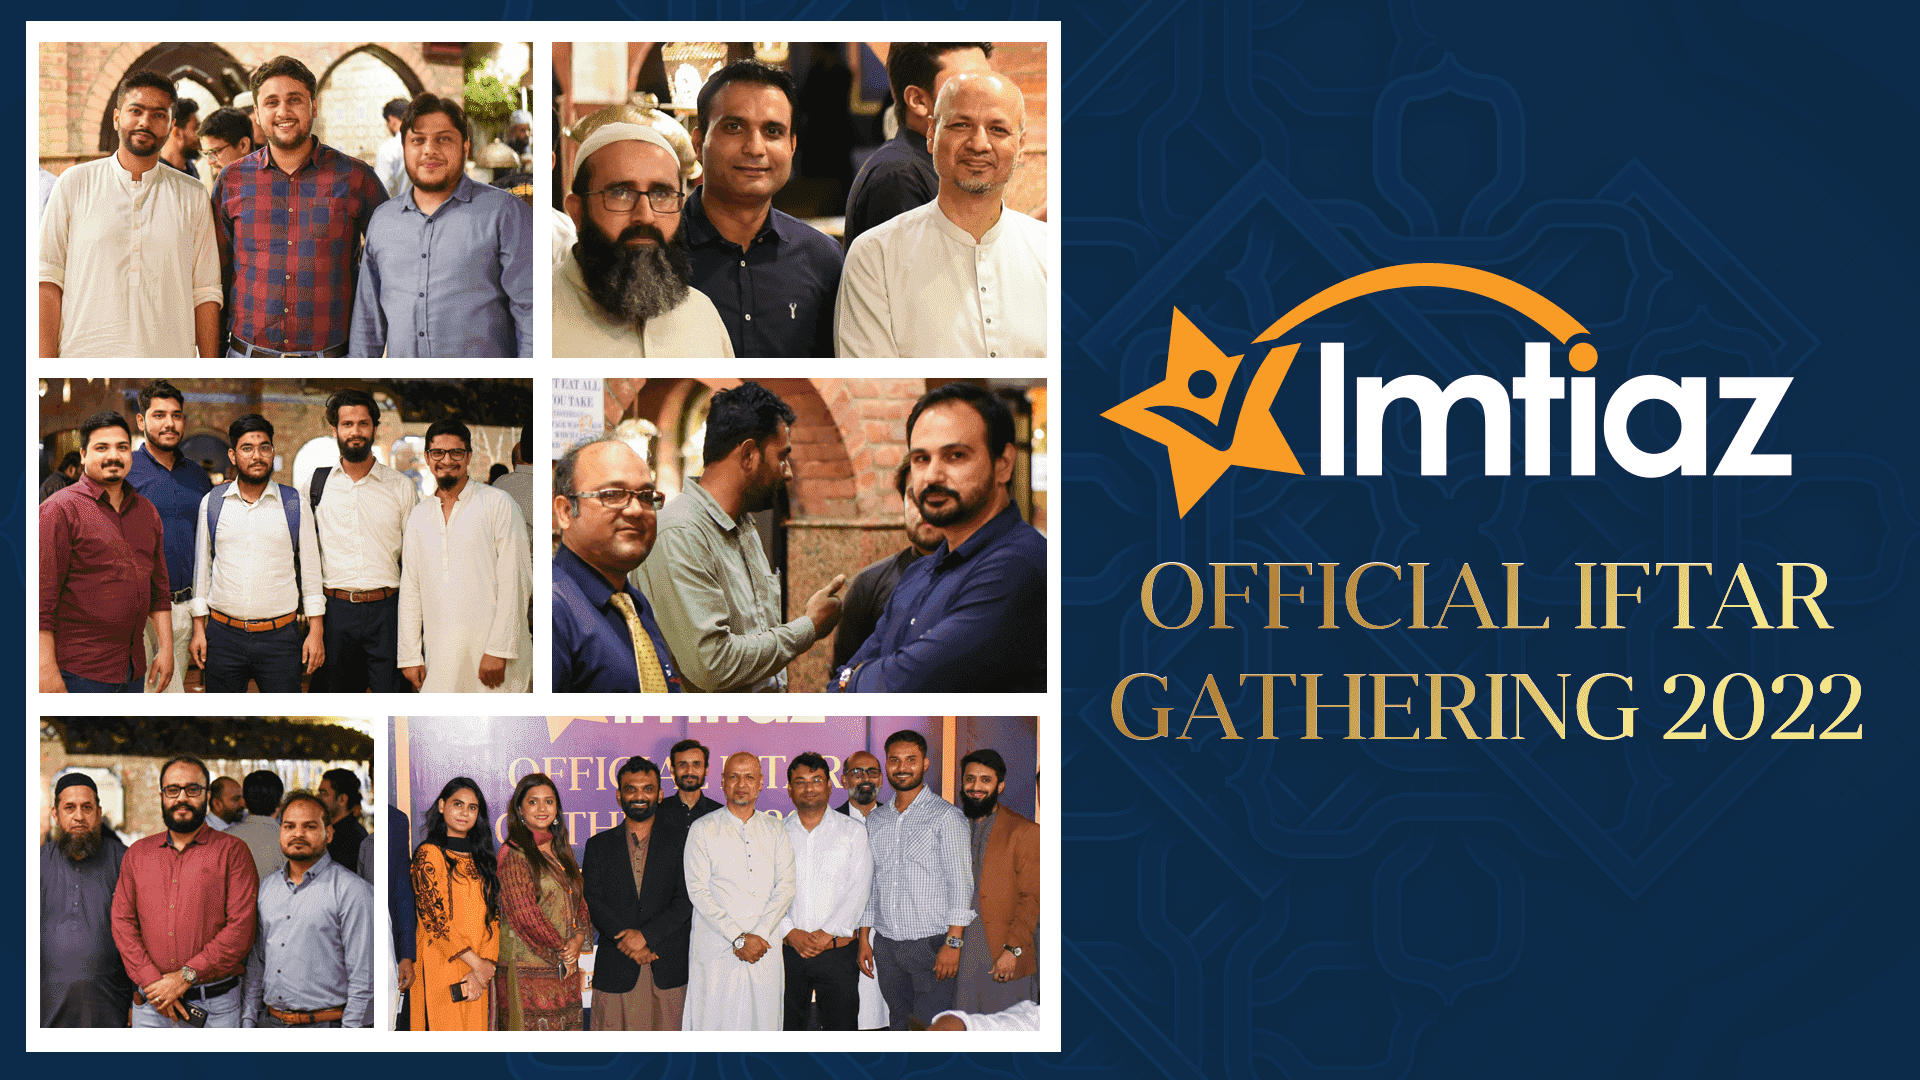 Employees Iftaar Gathering 2022 — Cherishing the blessings of Ramzan together!